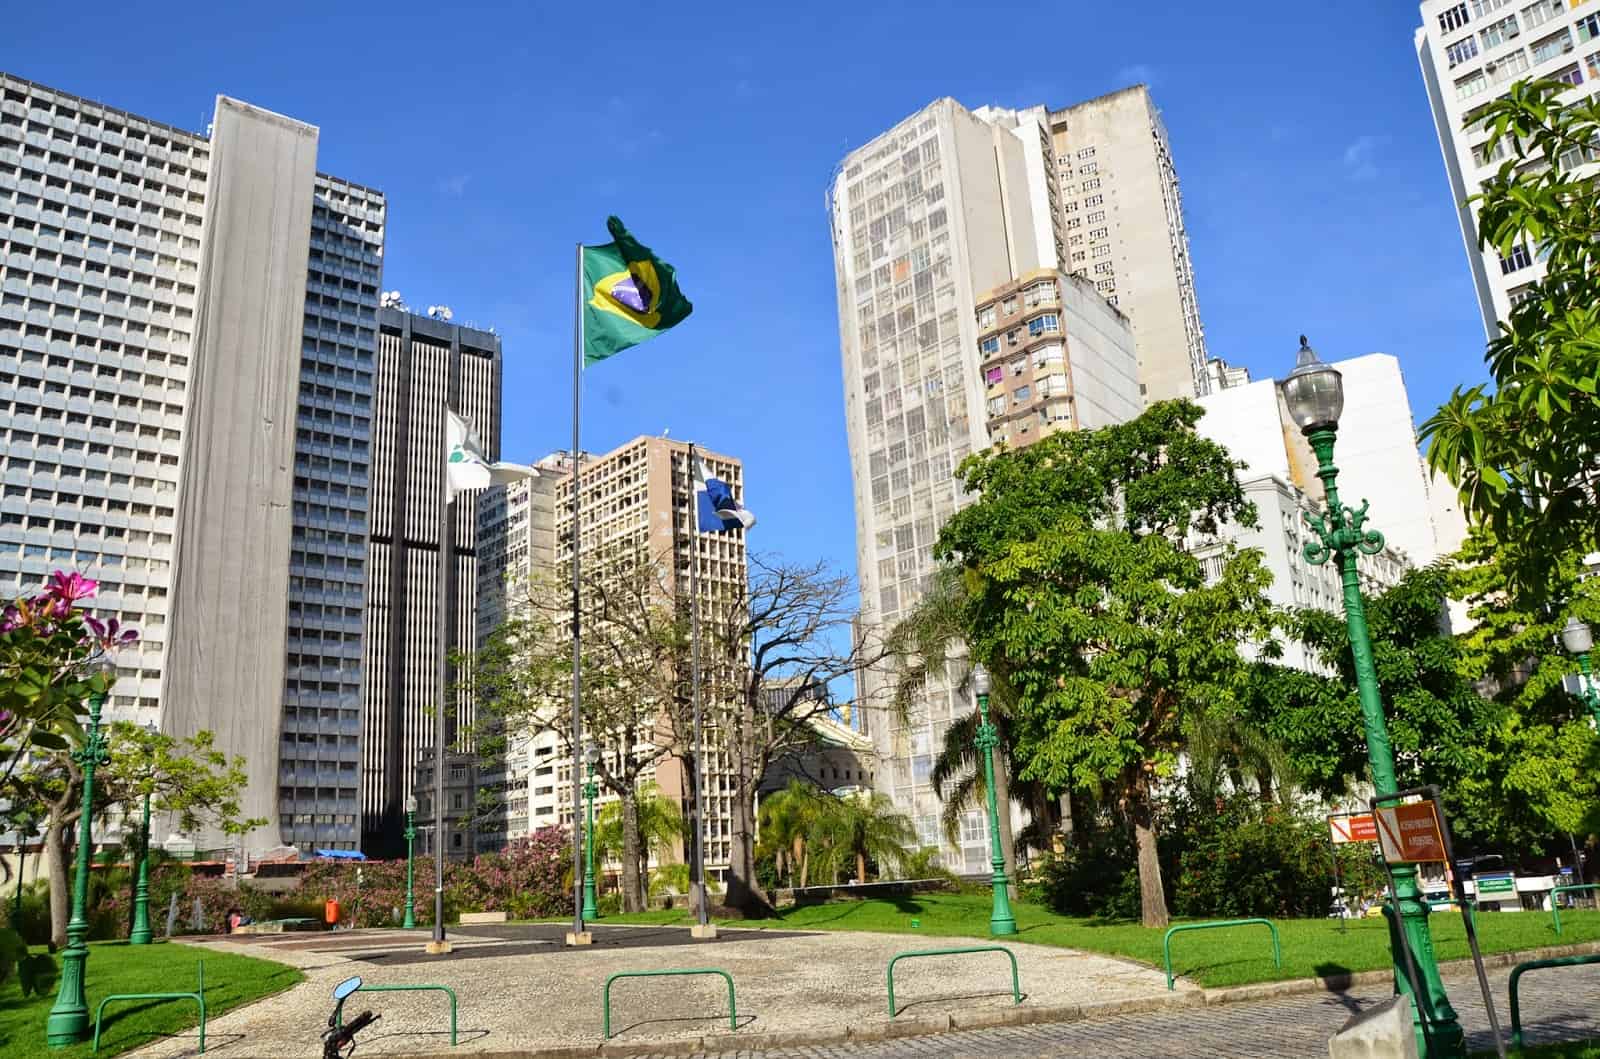 Largo da Carioca in Rio de Janeiro, Brazil